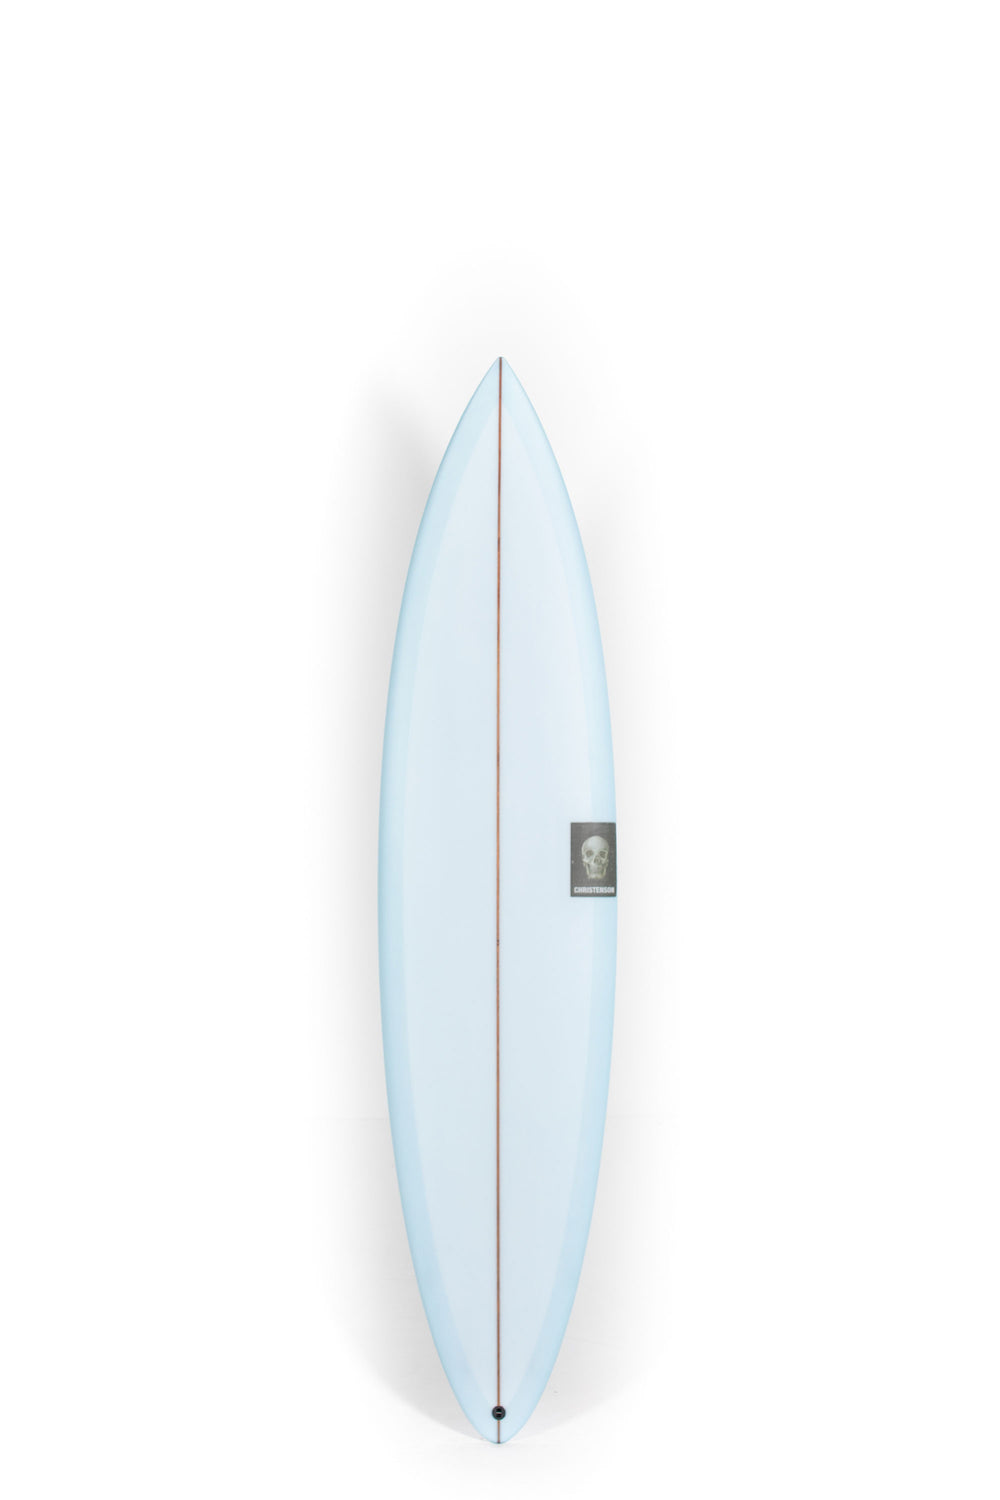 Christenson Surfboards - CARRERA - 7'0